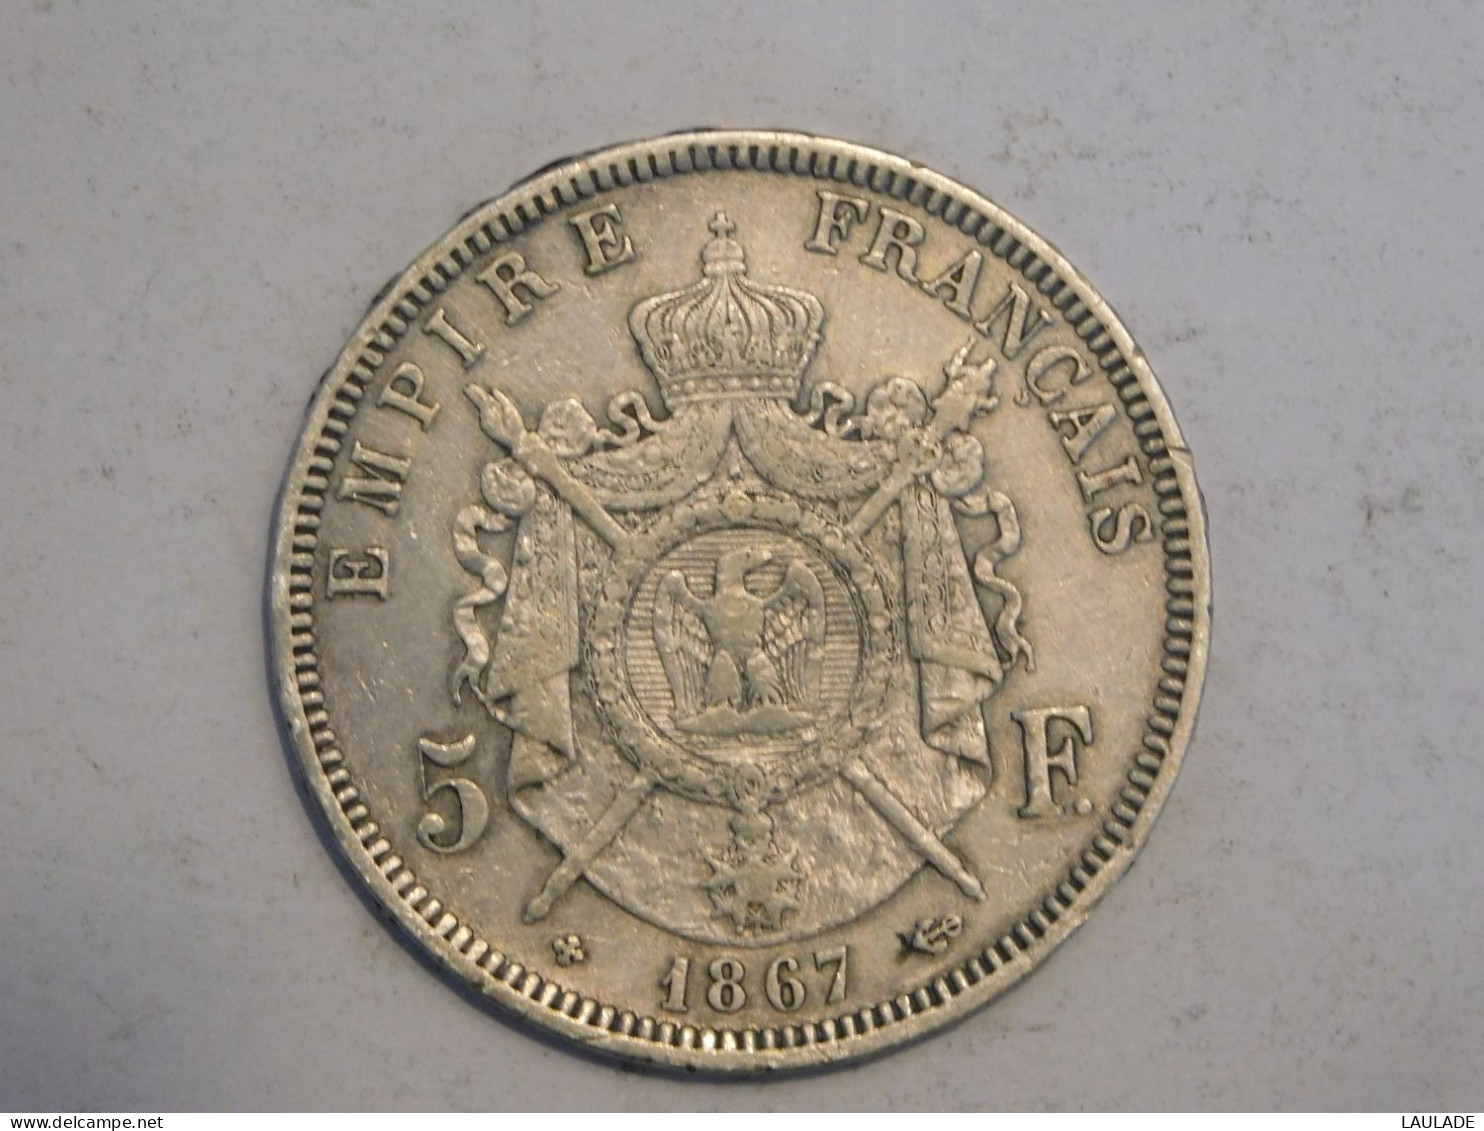 FRANCE 5 Francs 1867 BB - Silver, Argent Franc - 5 Francs